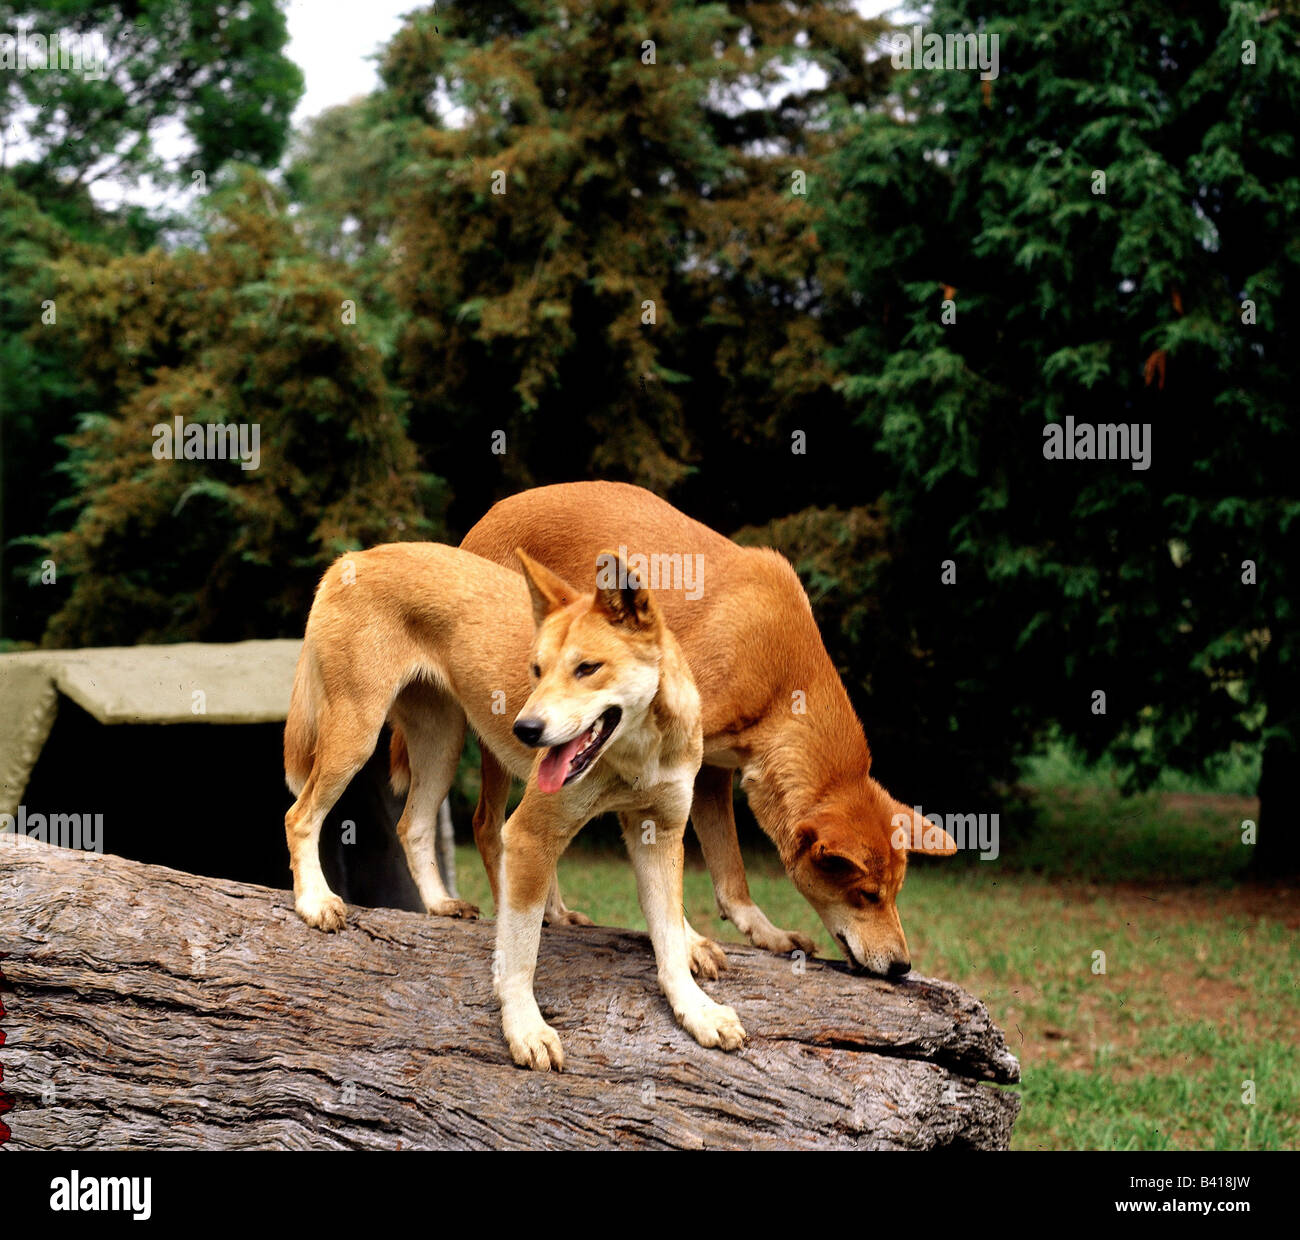 zoology / animals, mammal / mammalian, Dingo, (Canis lupus forma Dingo), two dingos standing on tree trunk, distribution: Austra Stock Photo